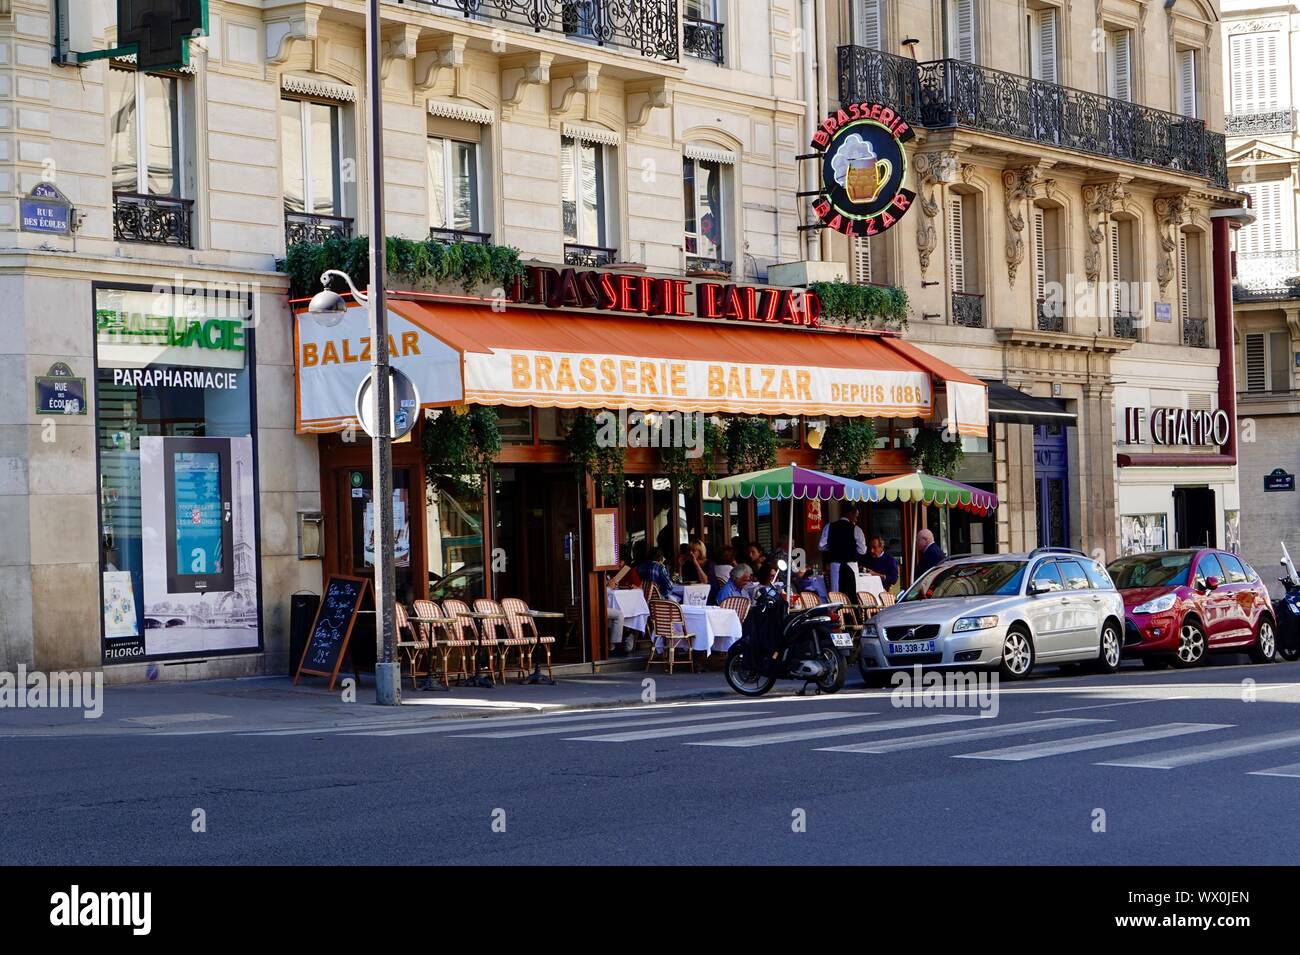 People eating outside on the sidewalk terrace of Brasserie Balzar, historic restaurant on rue des Écoles, Paris, France Stock Photo